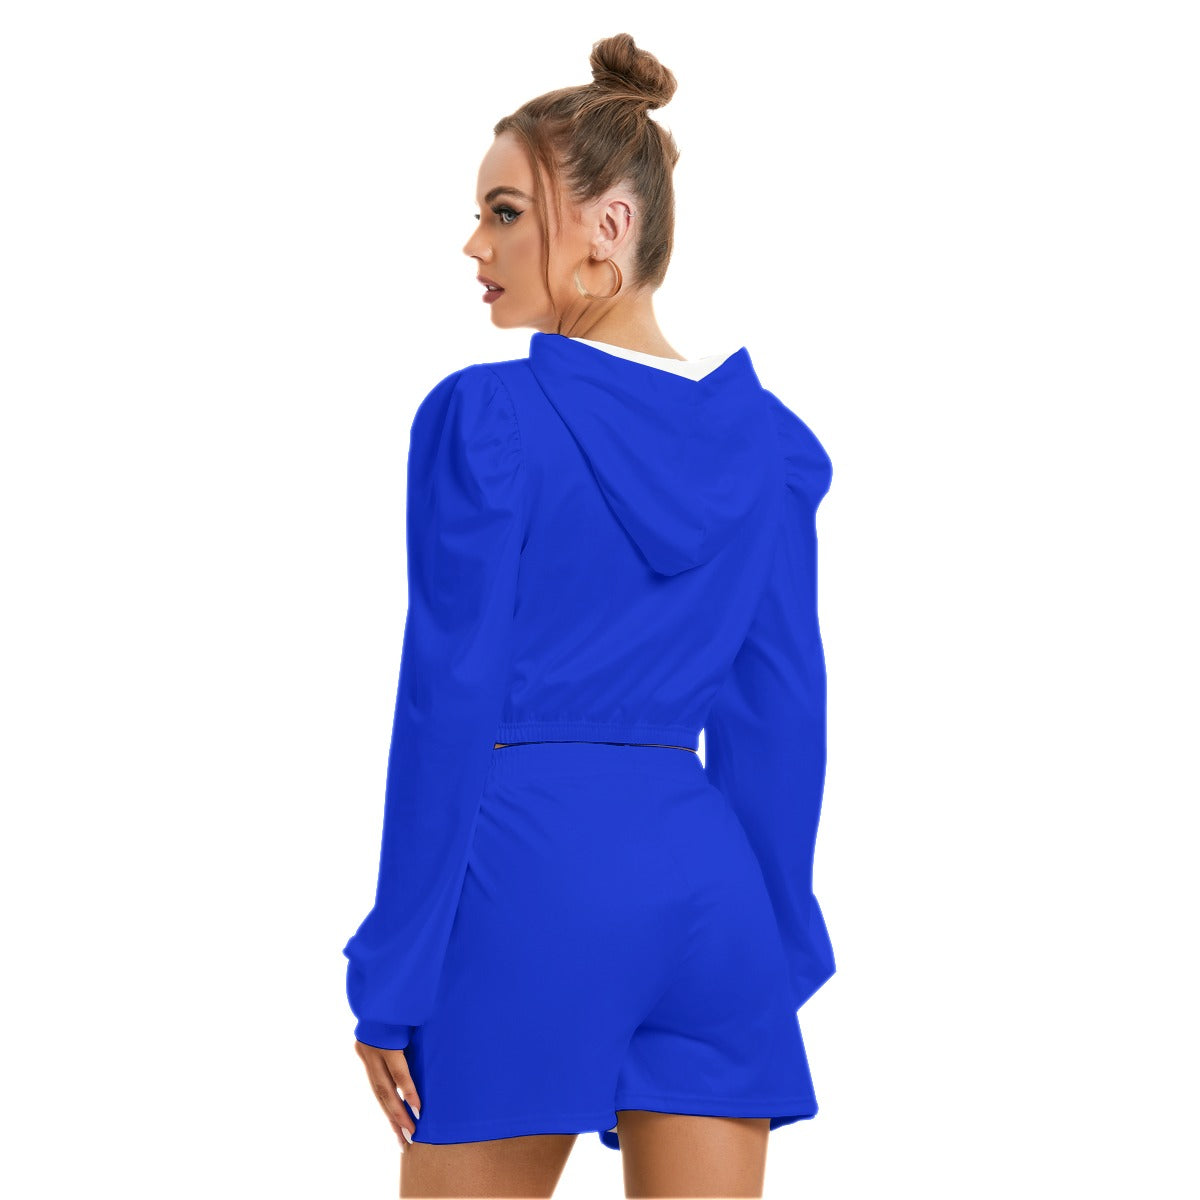 ROYAL All-Over Print Women's Mirco Fleece Hoodie And Shorts Set